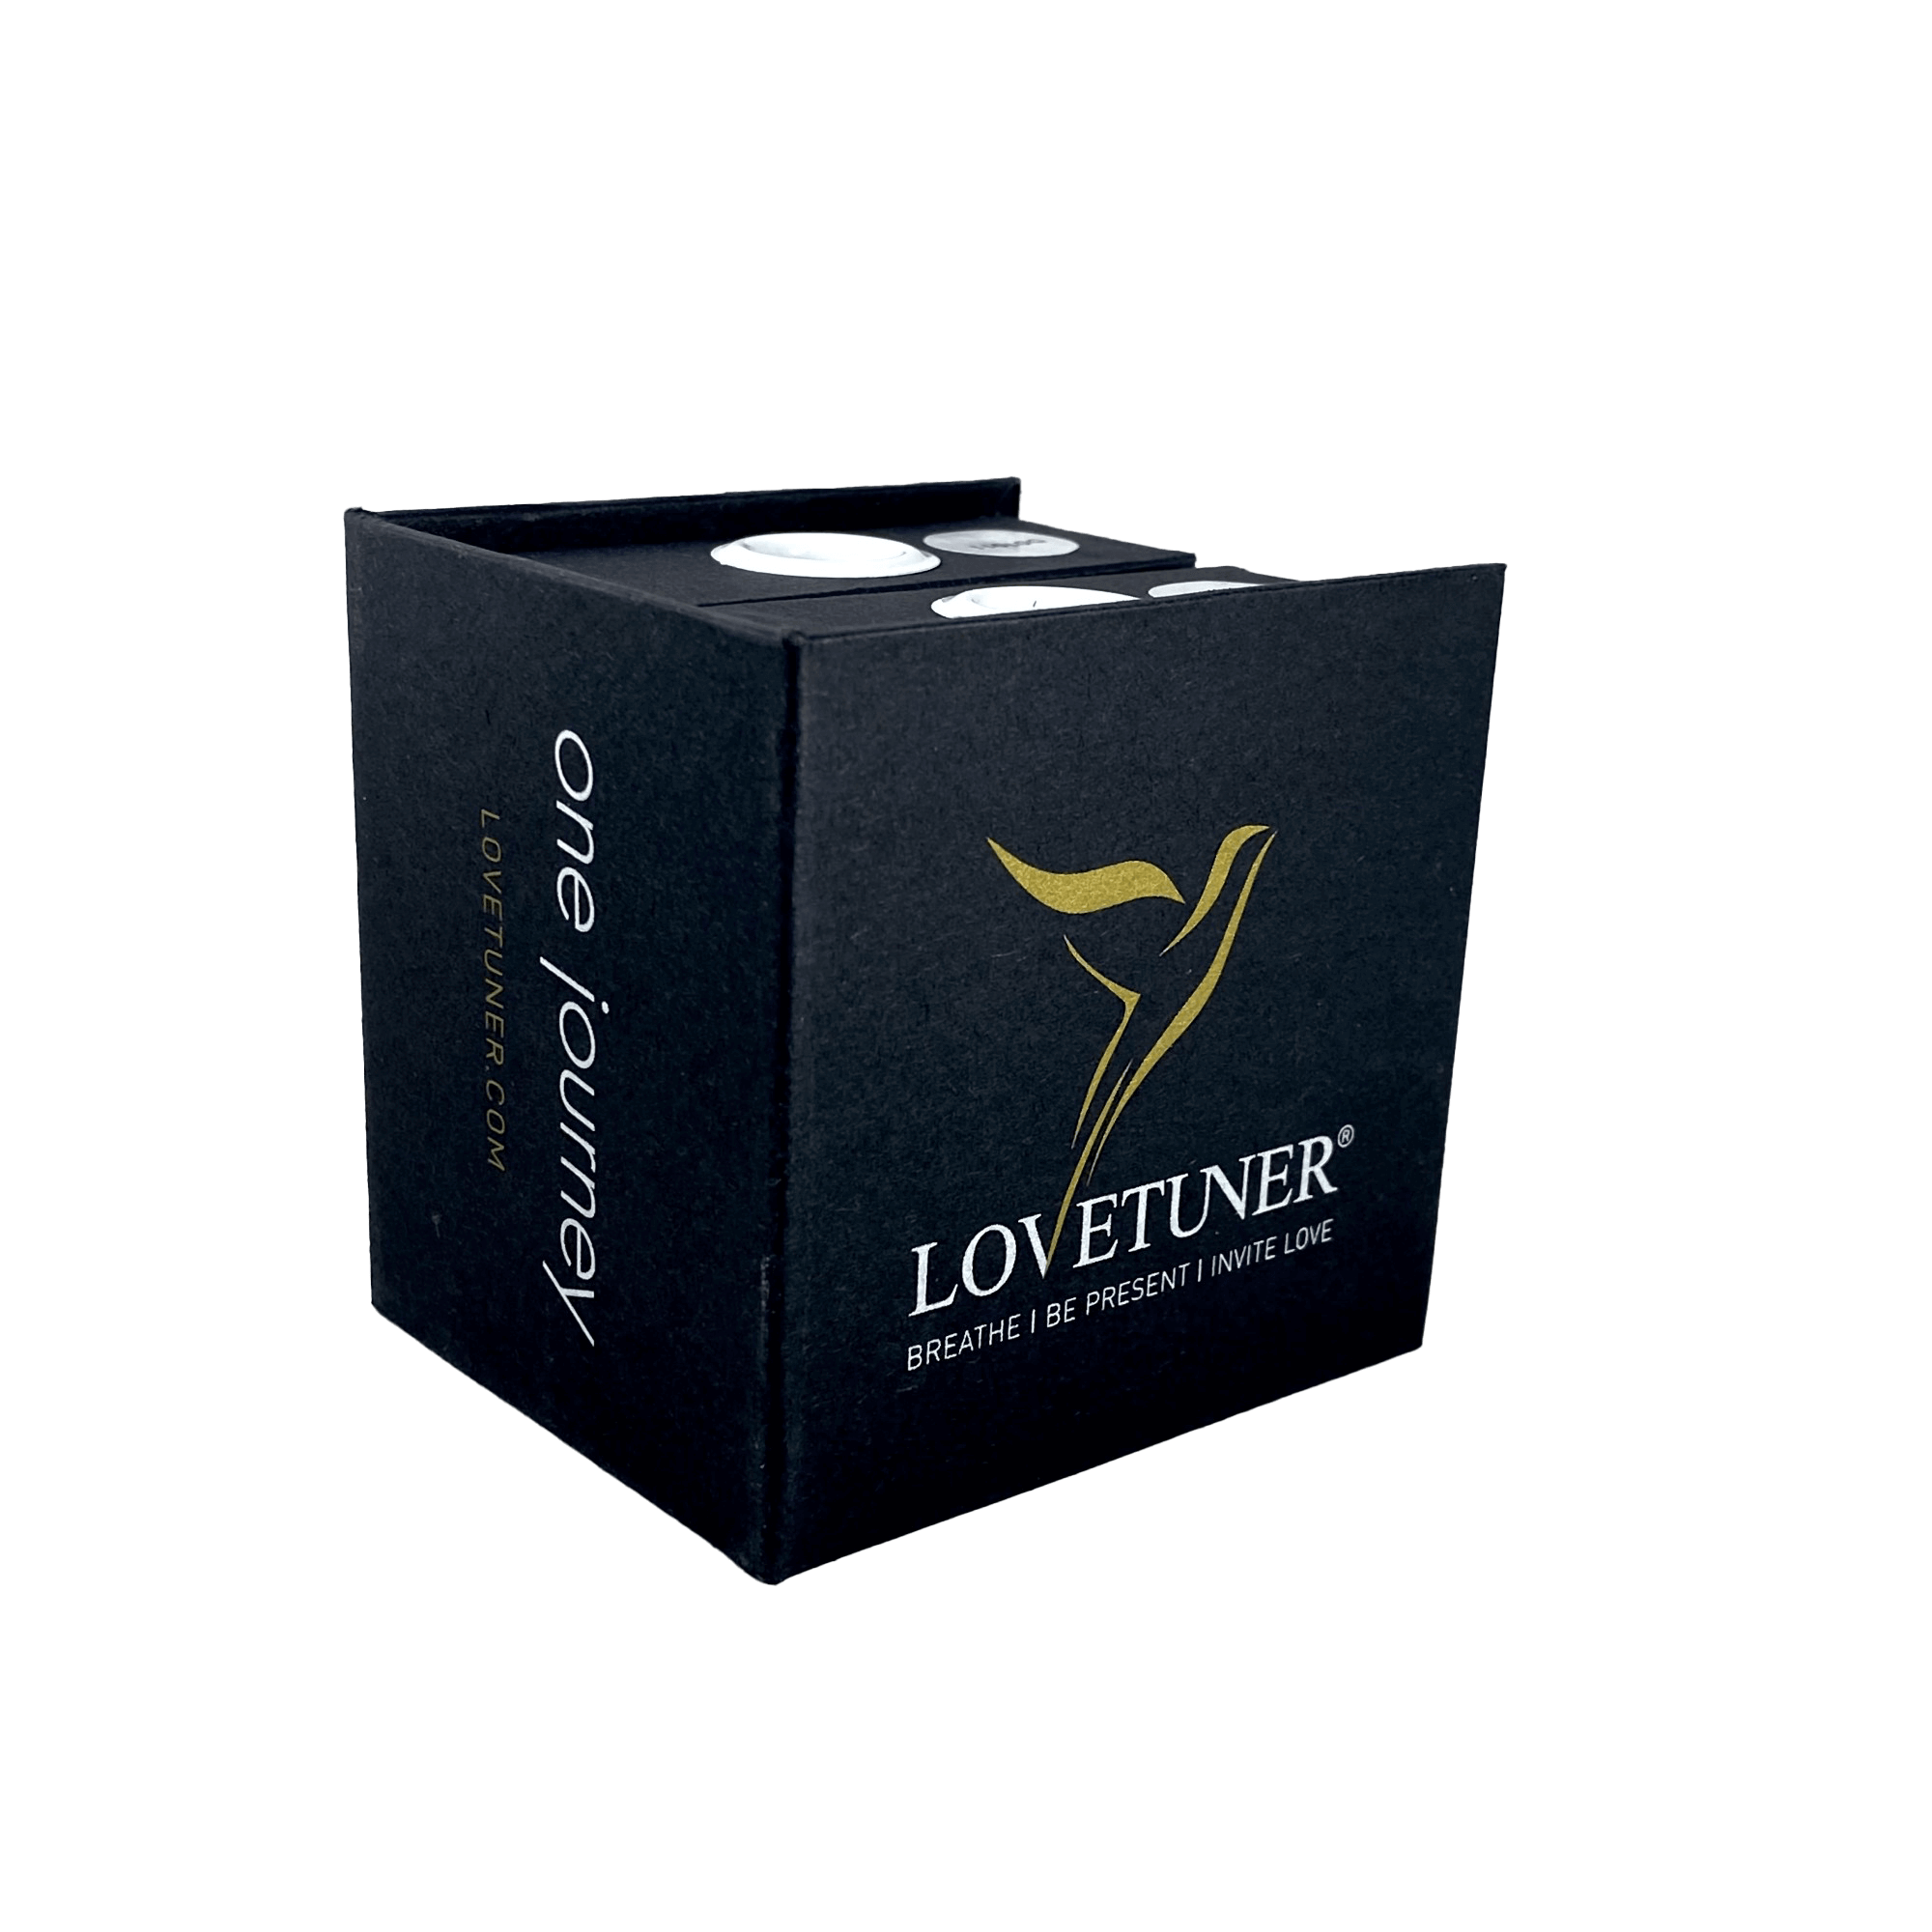 Duet Box enthält 2 Bronze Lovetuners